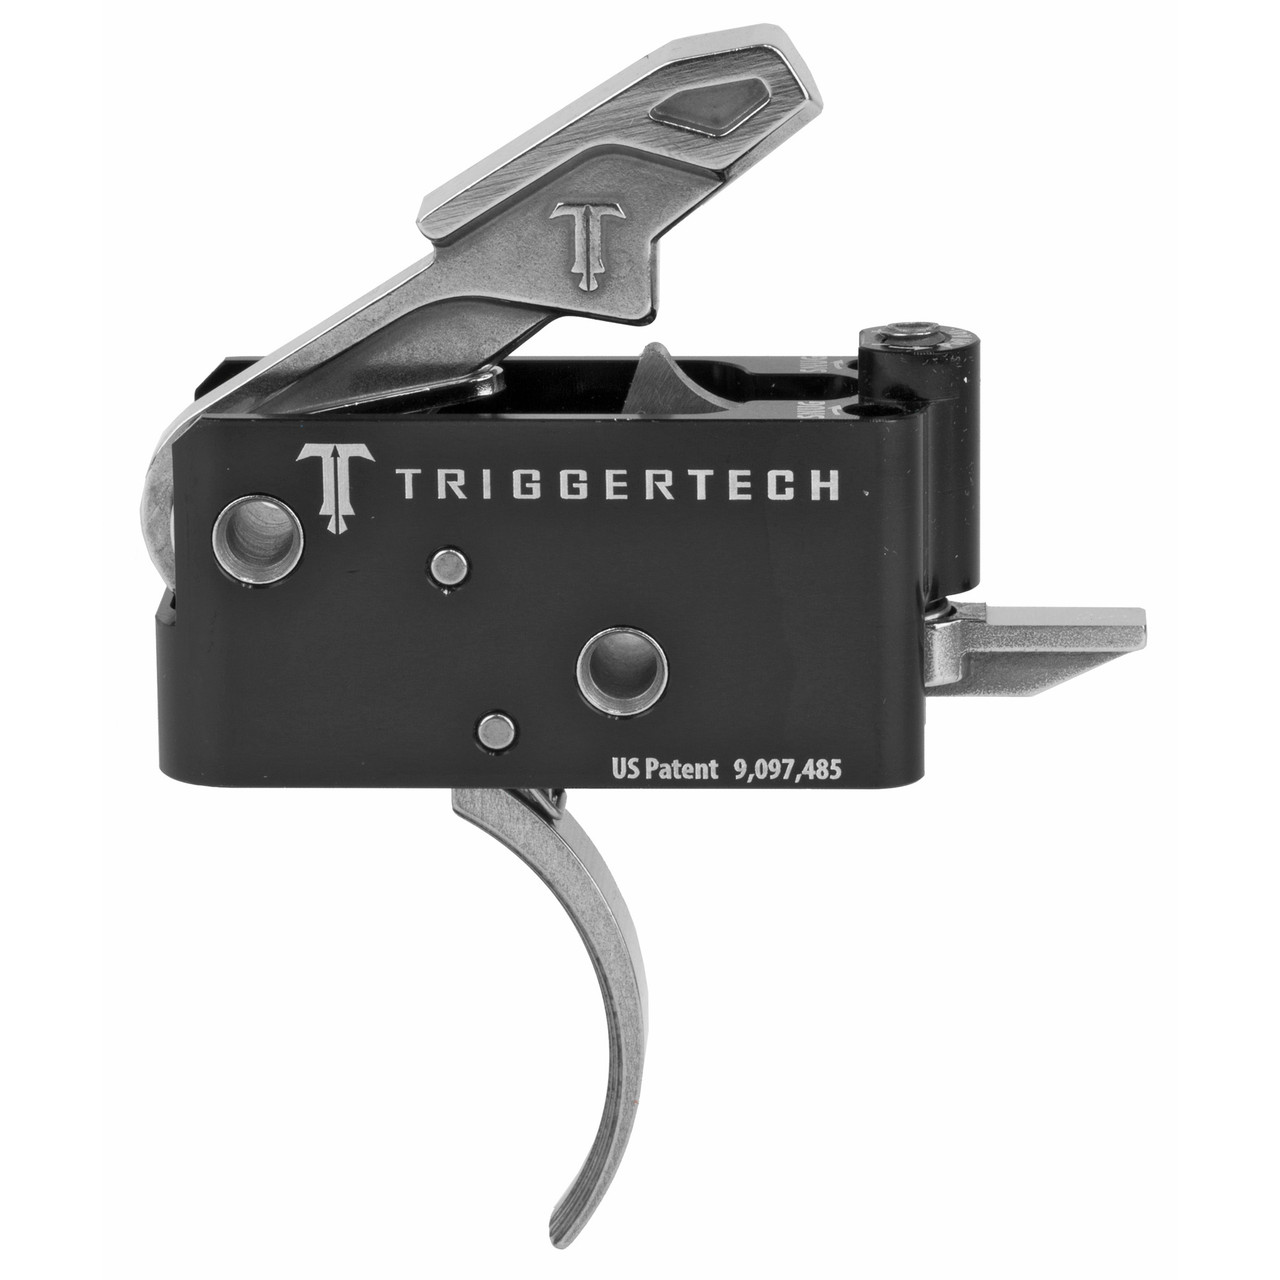 TriggerTech AR0-TBS-25-NNC AR15 Adapt Crvd Rh